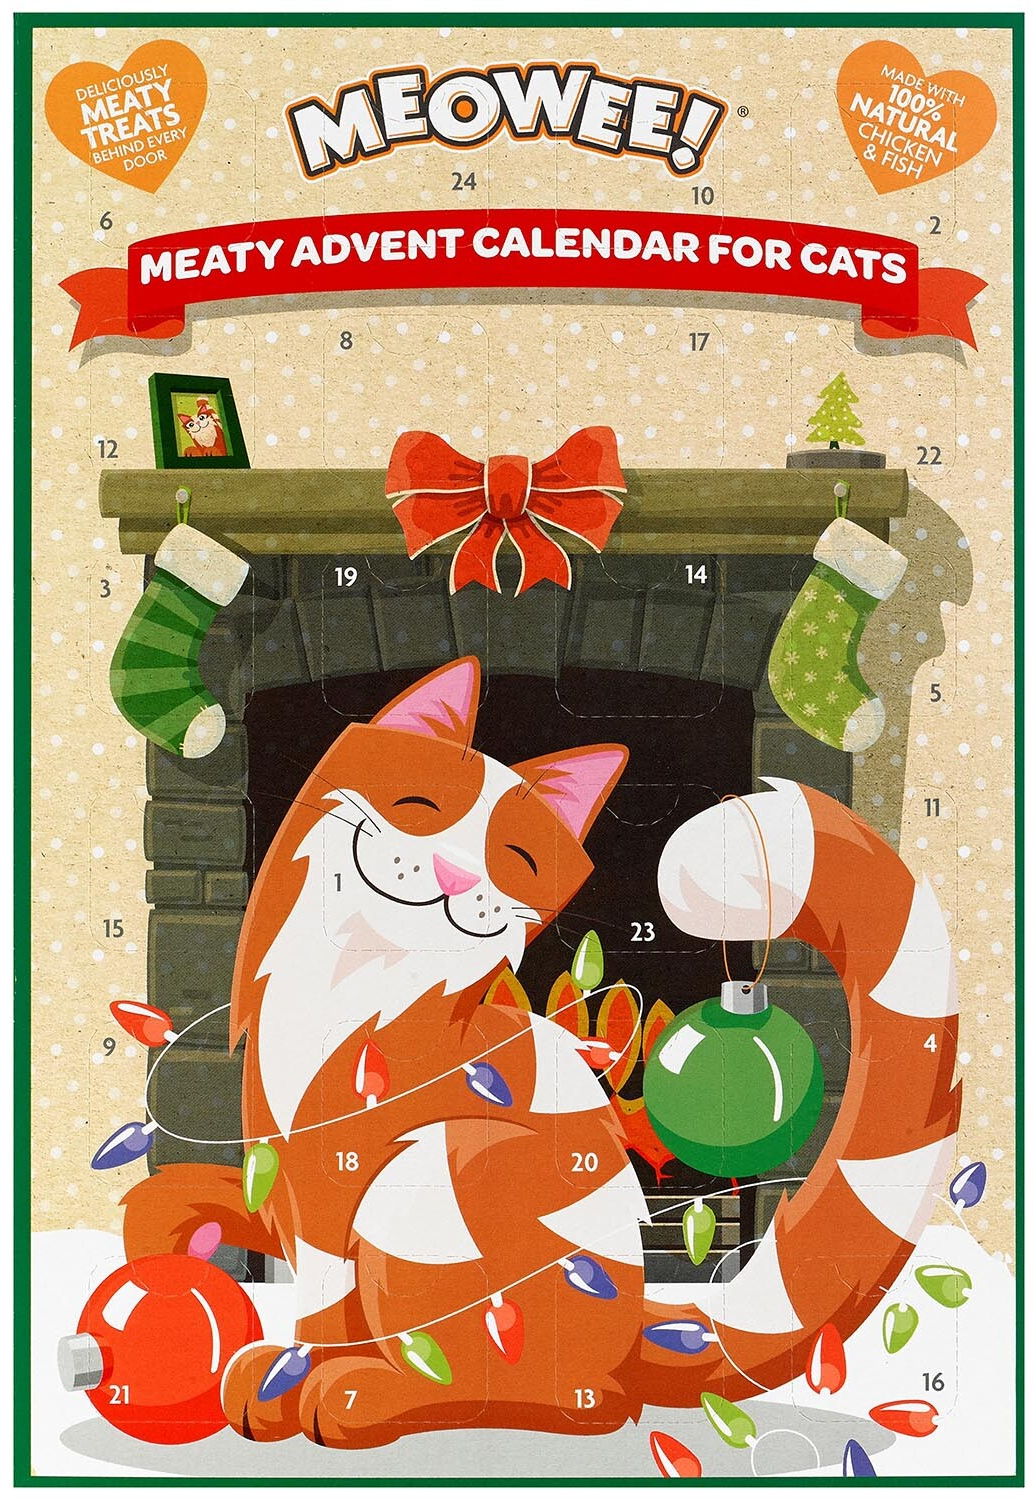 Meowee Meaty Advent Calendar for Cats Content (EN)